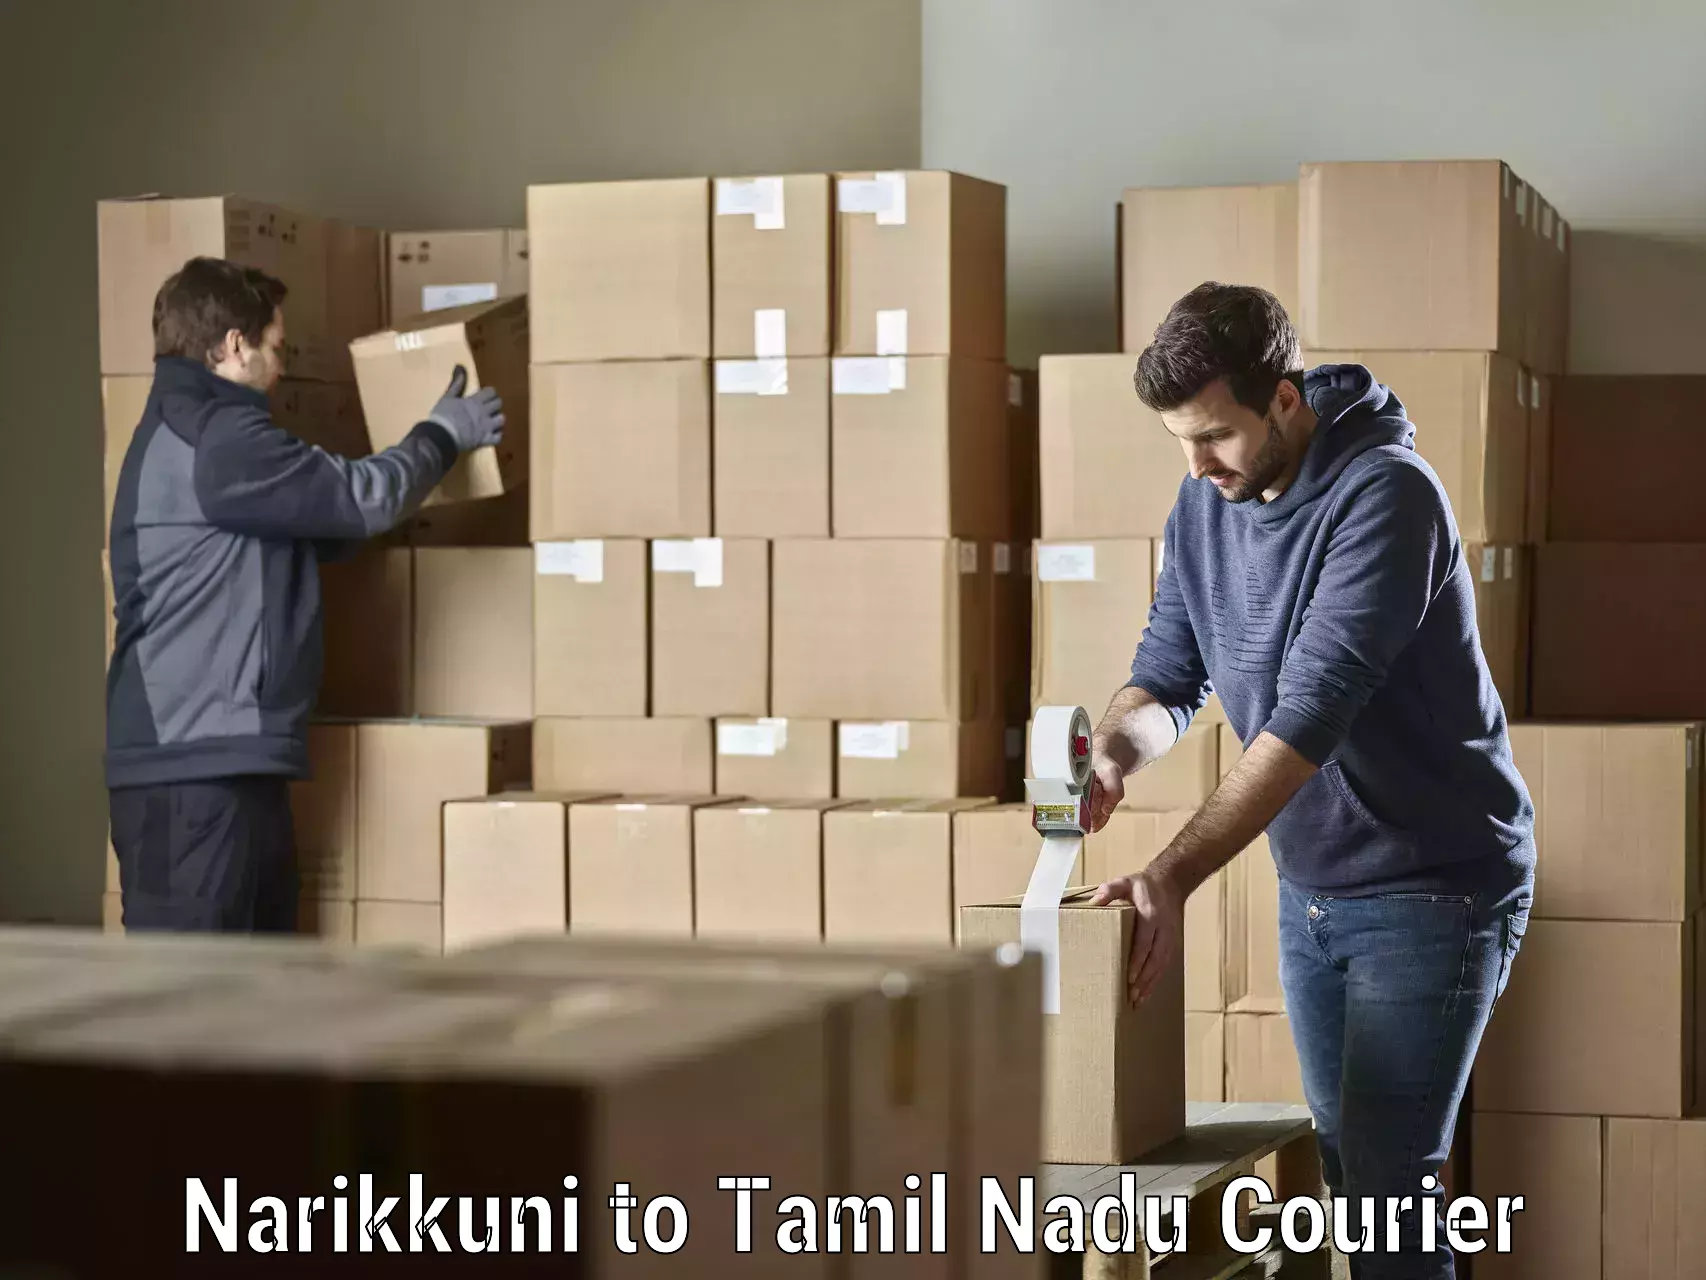 Efficient order fulfillment Narikkuni to Tamil Nadu